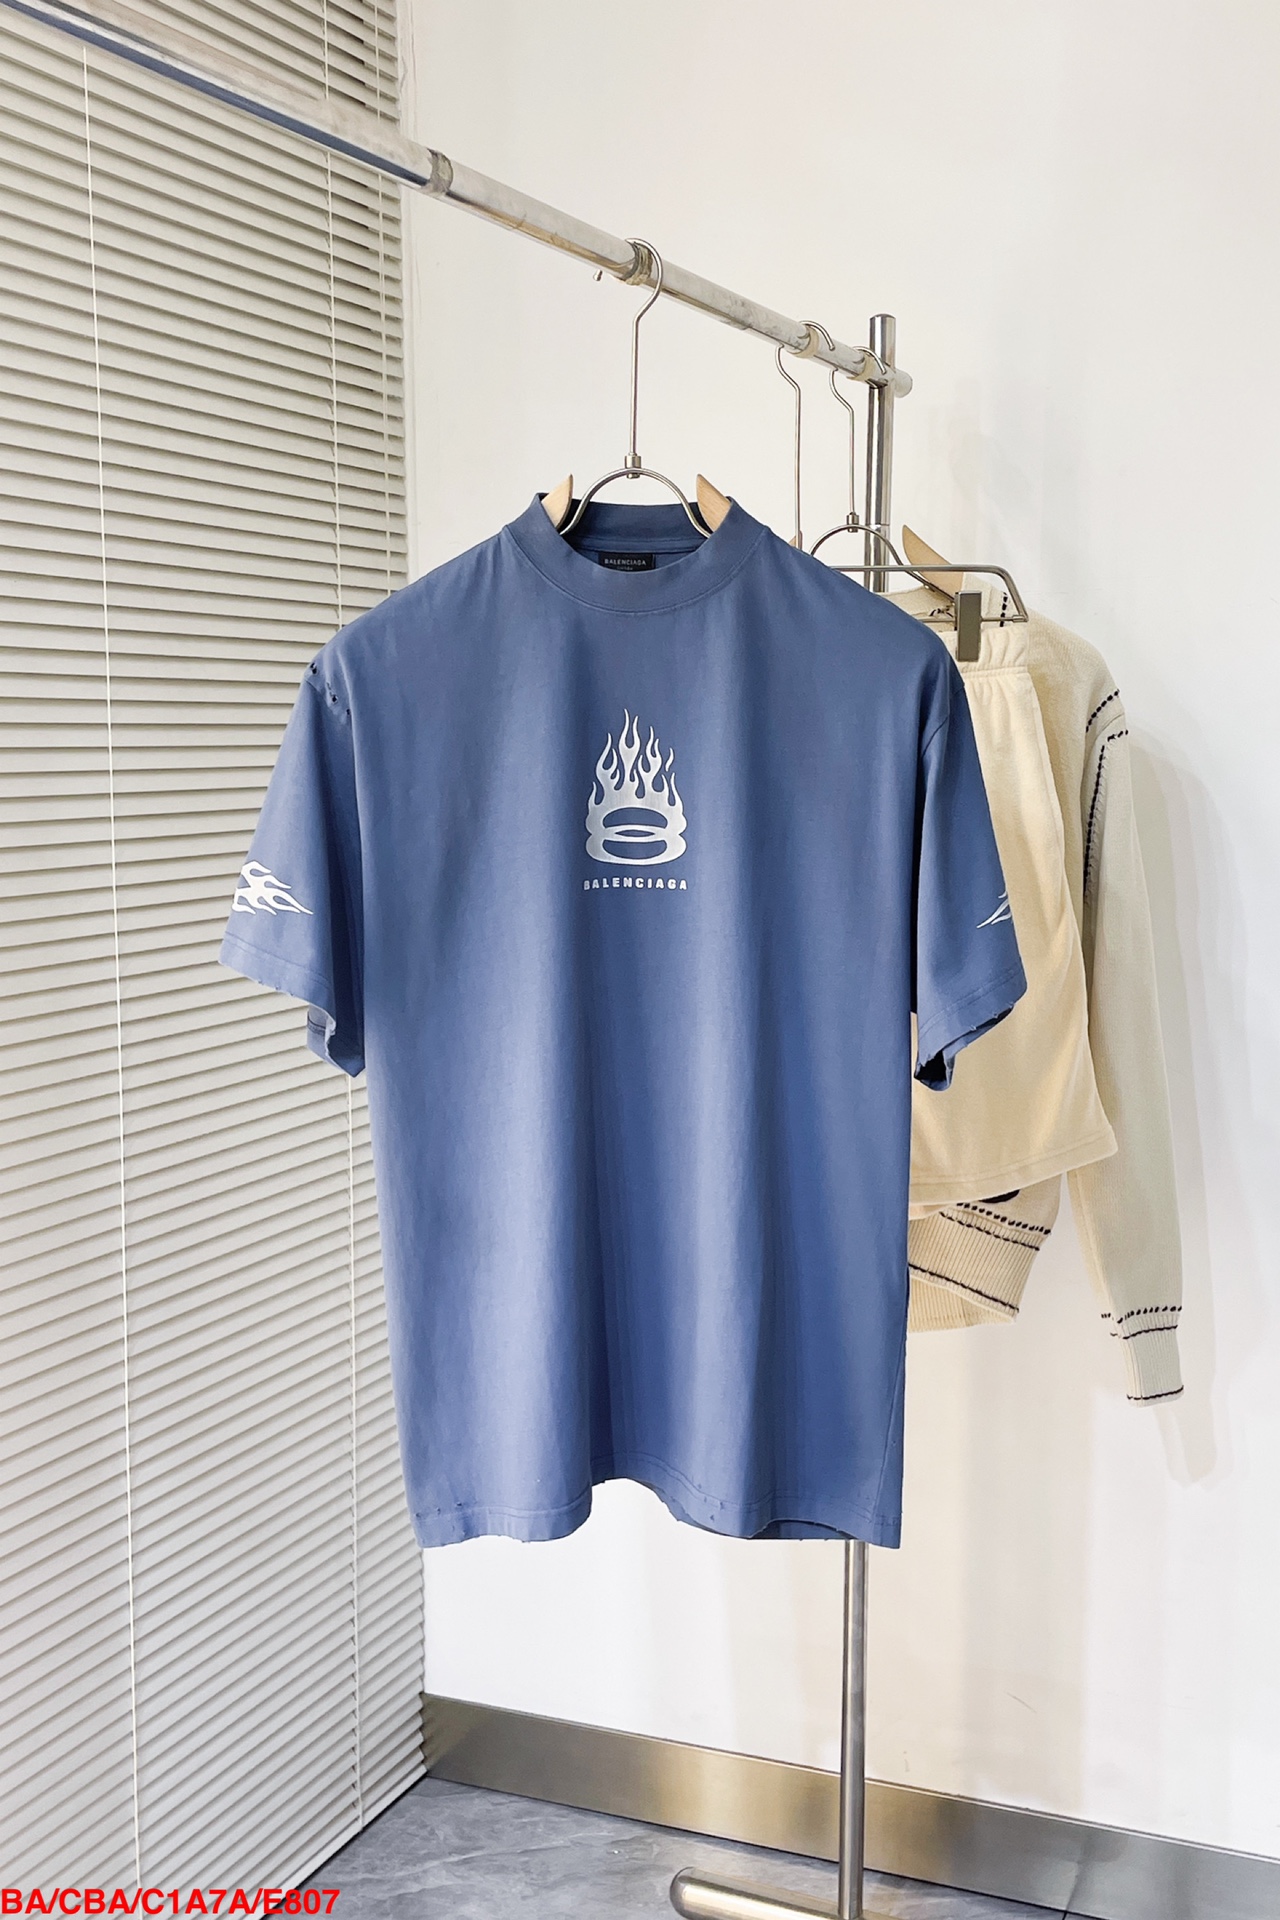 Balenciaga Clothing T-Shirt Black Blue Grey Yellow Printing Unisex Spring/Summer Collection Short Sleeve